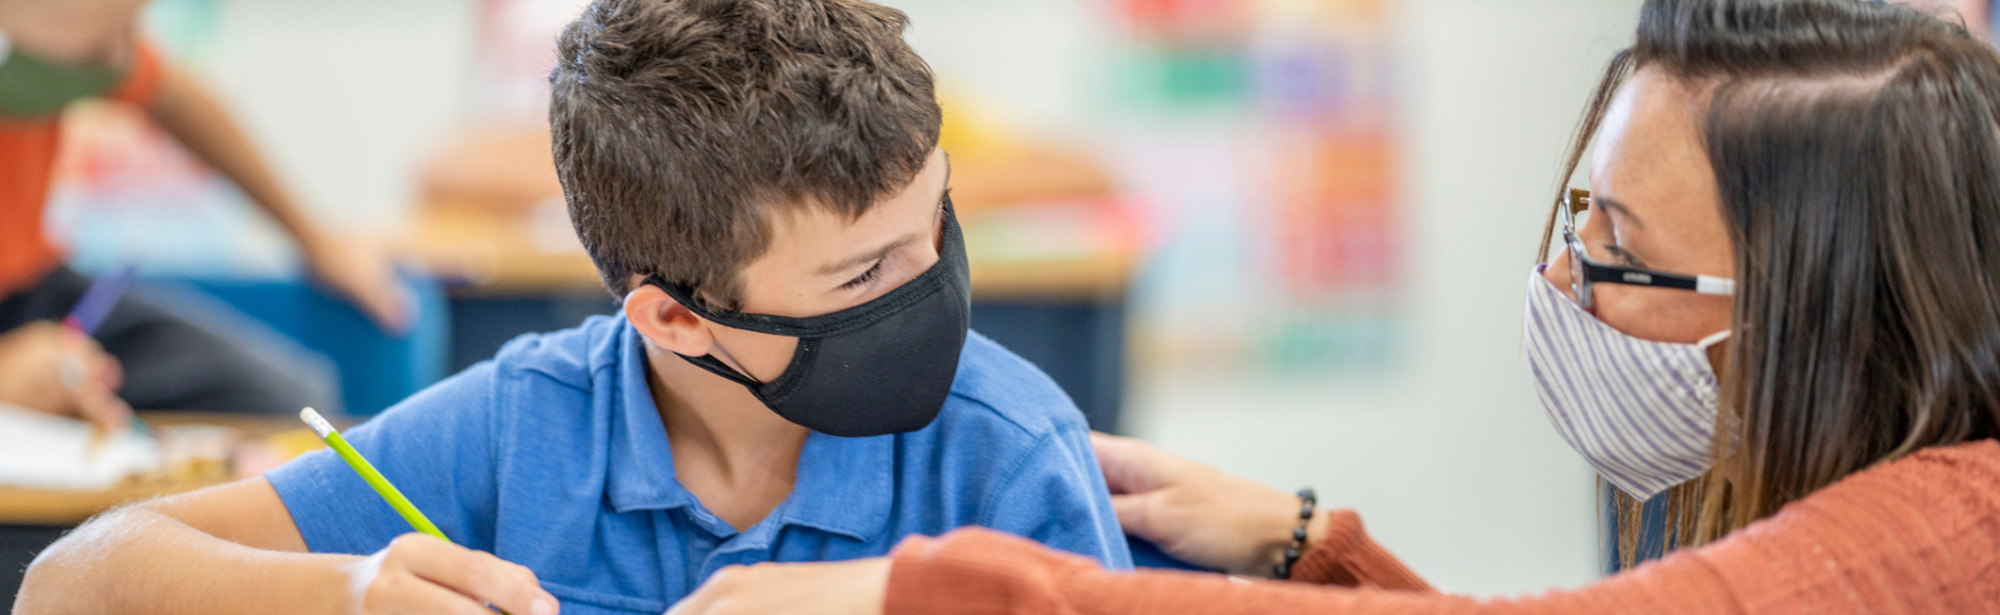 Elementary school teacher helping student, both wearing masks